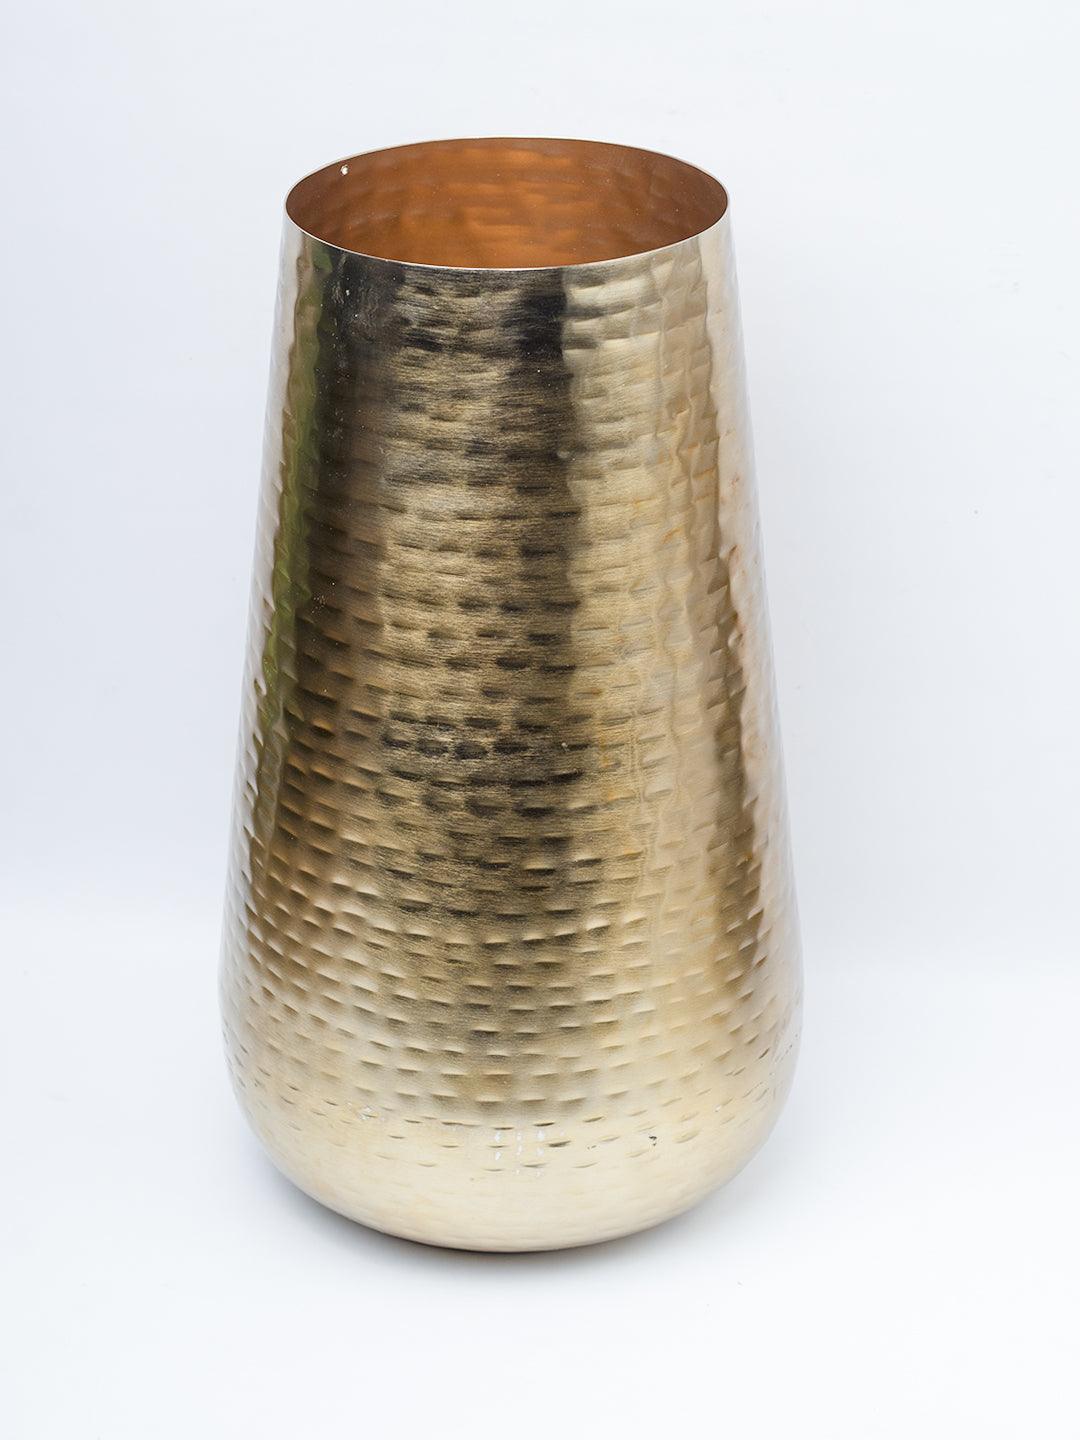 Gold Cylindrical Flower Vase  - 3